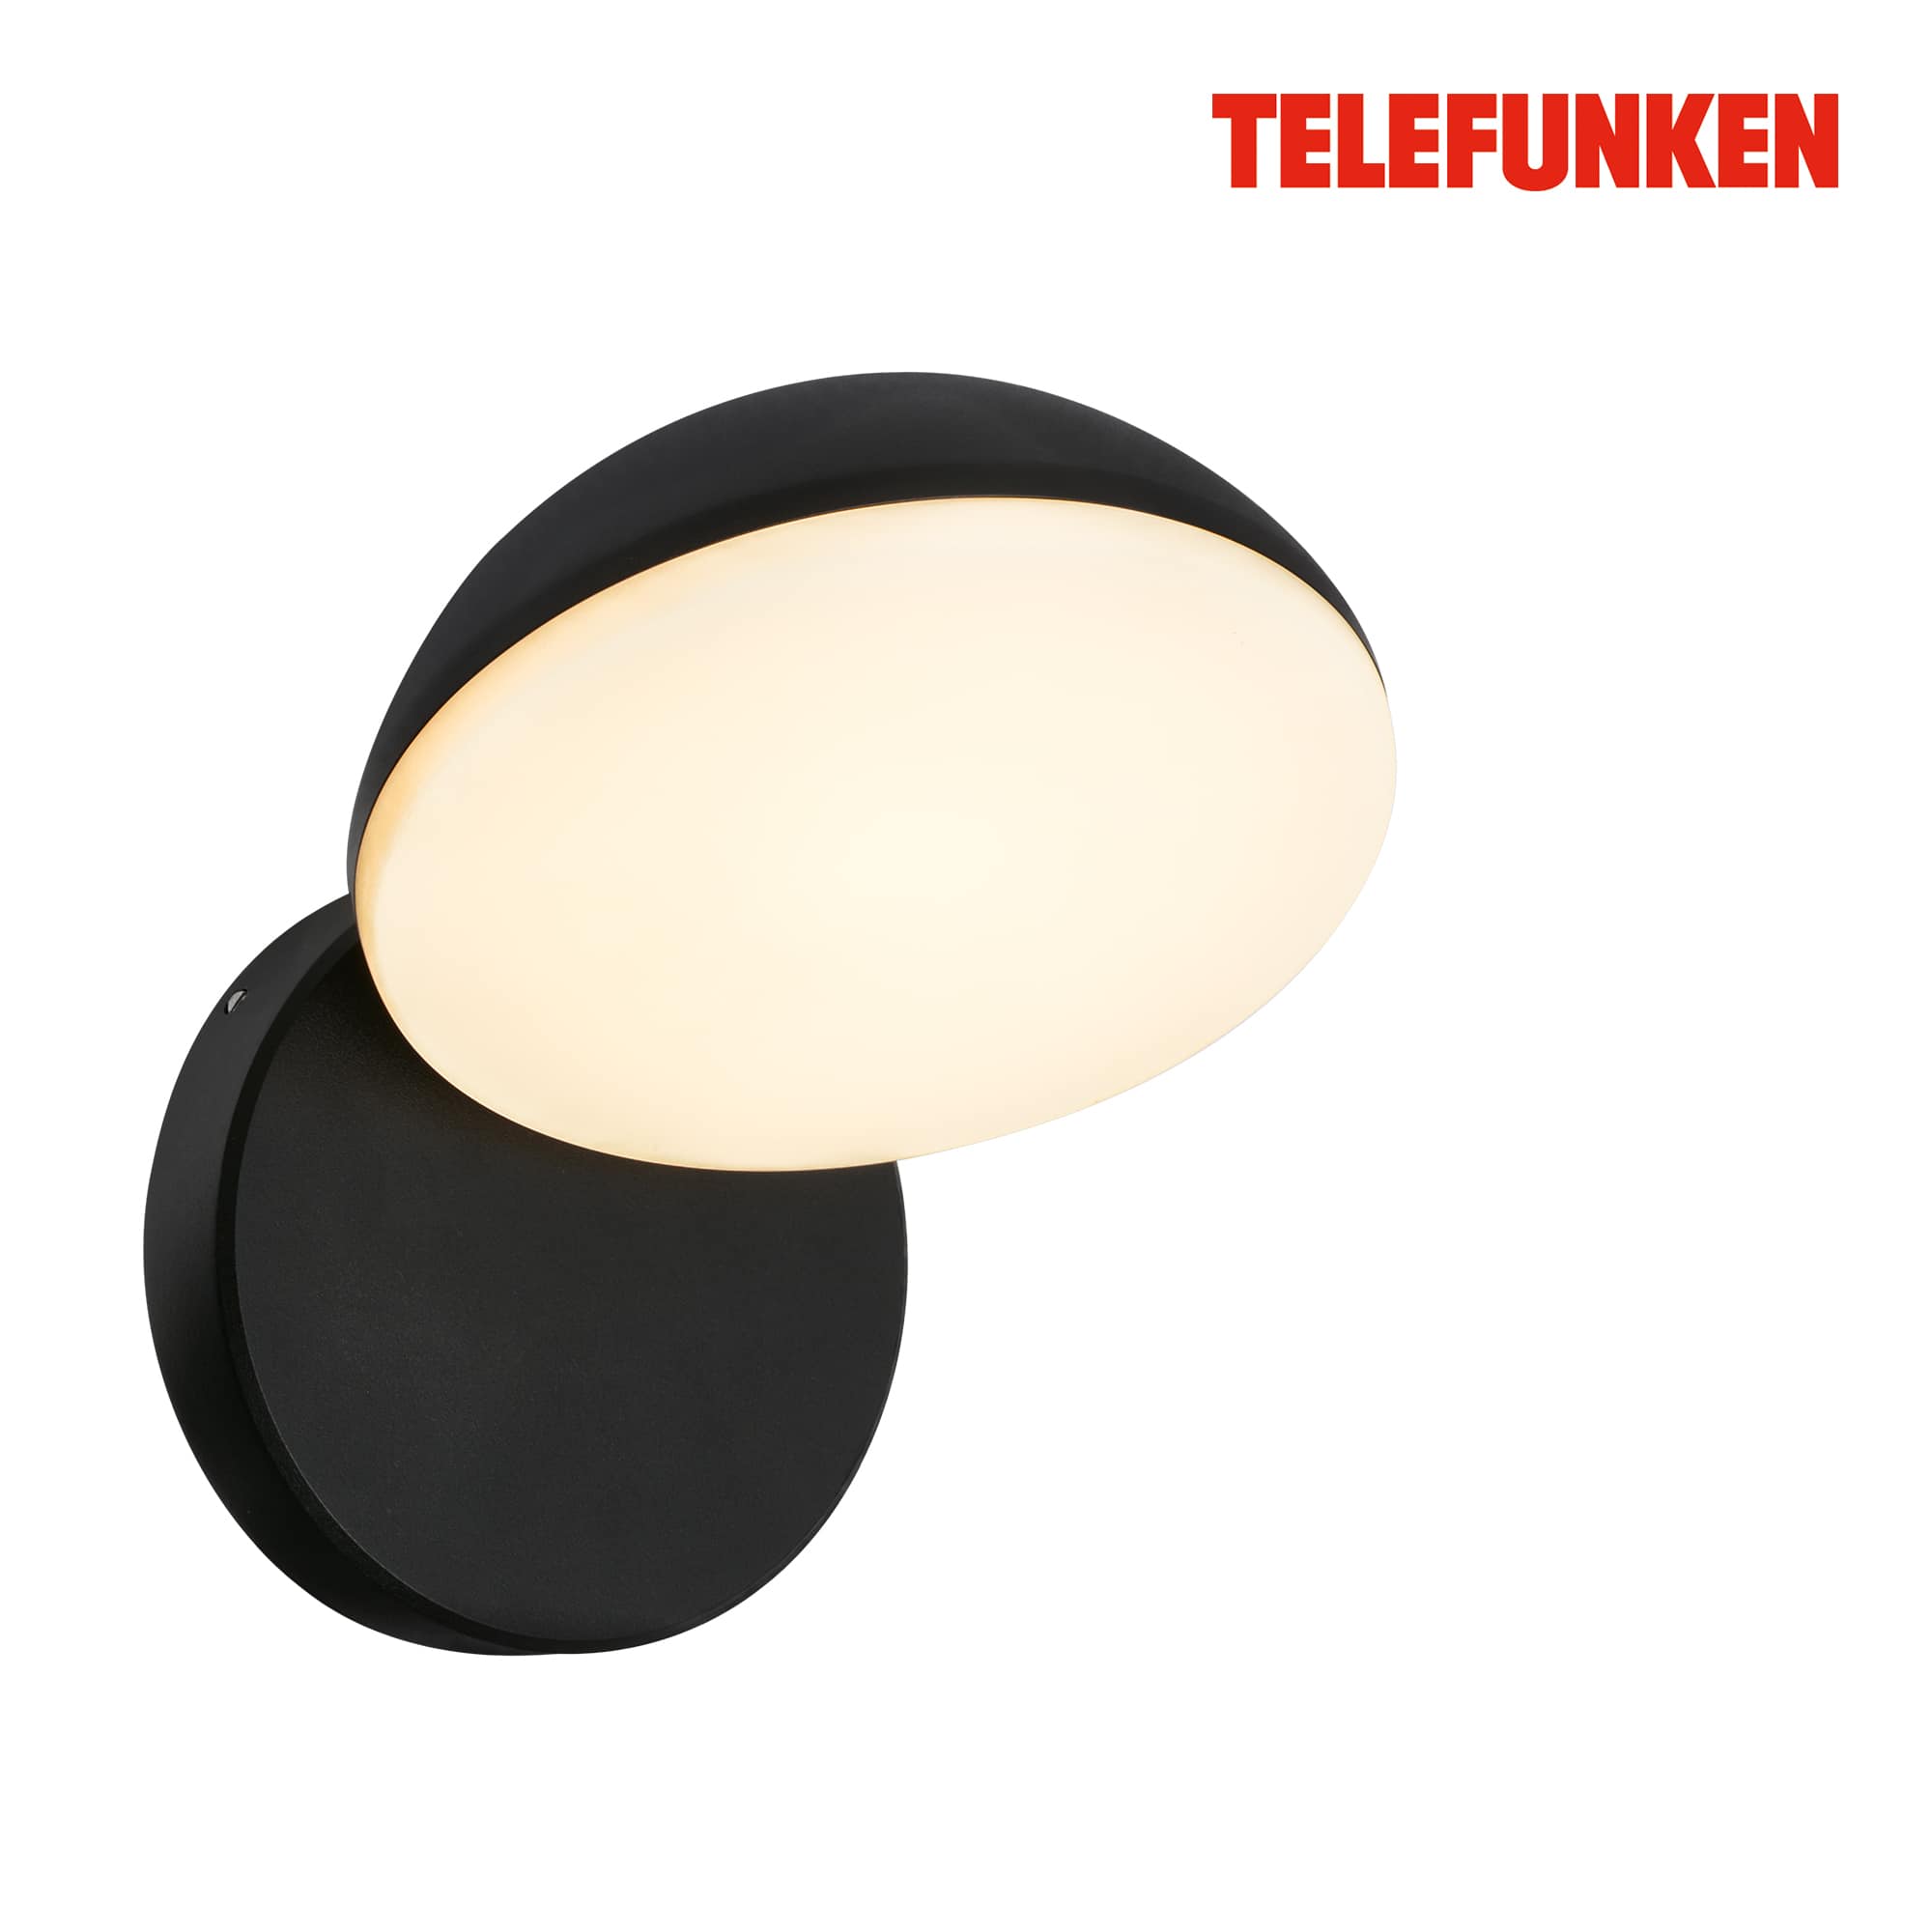 Telefunken LED wandlamp, spatwater- en stofbescherming, On/Off